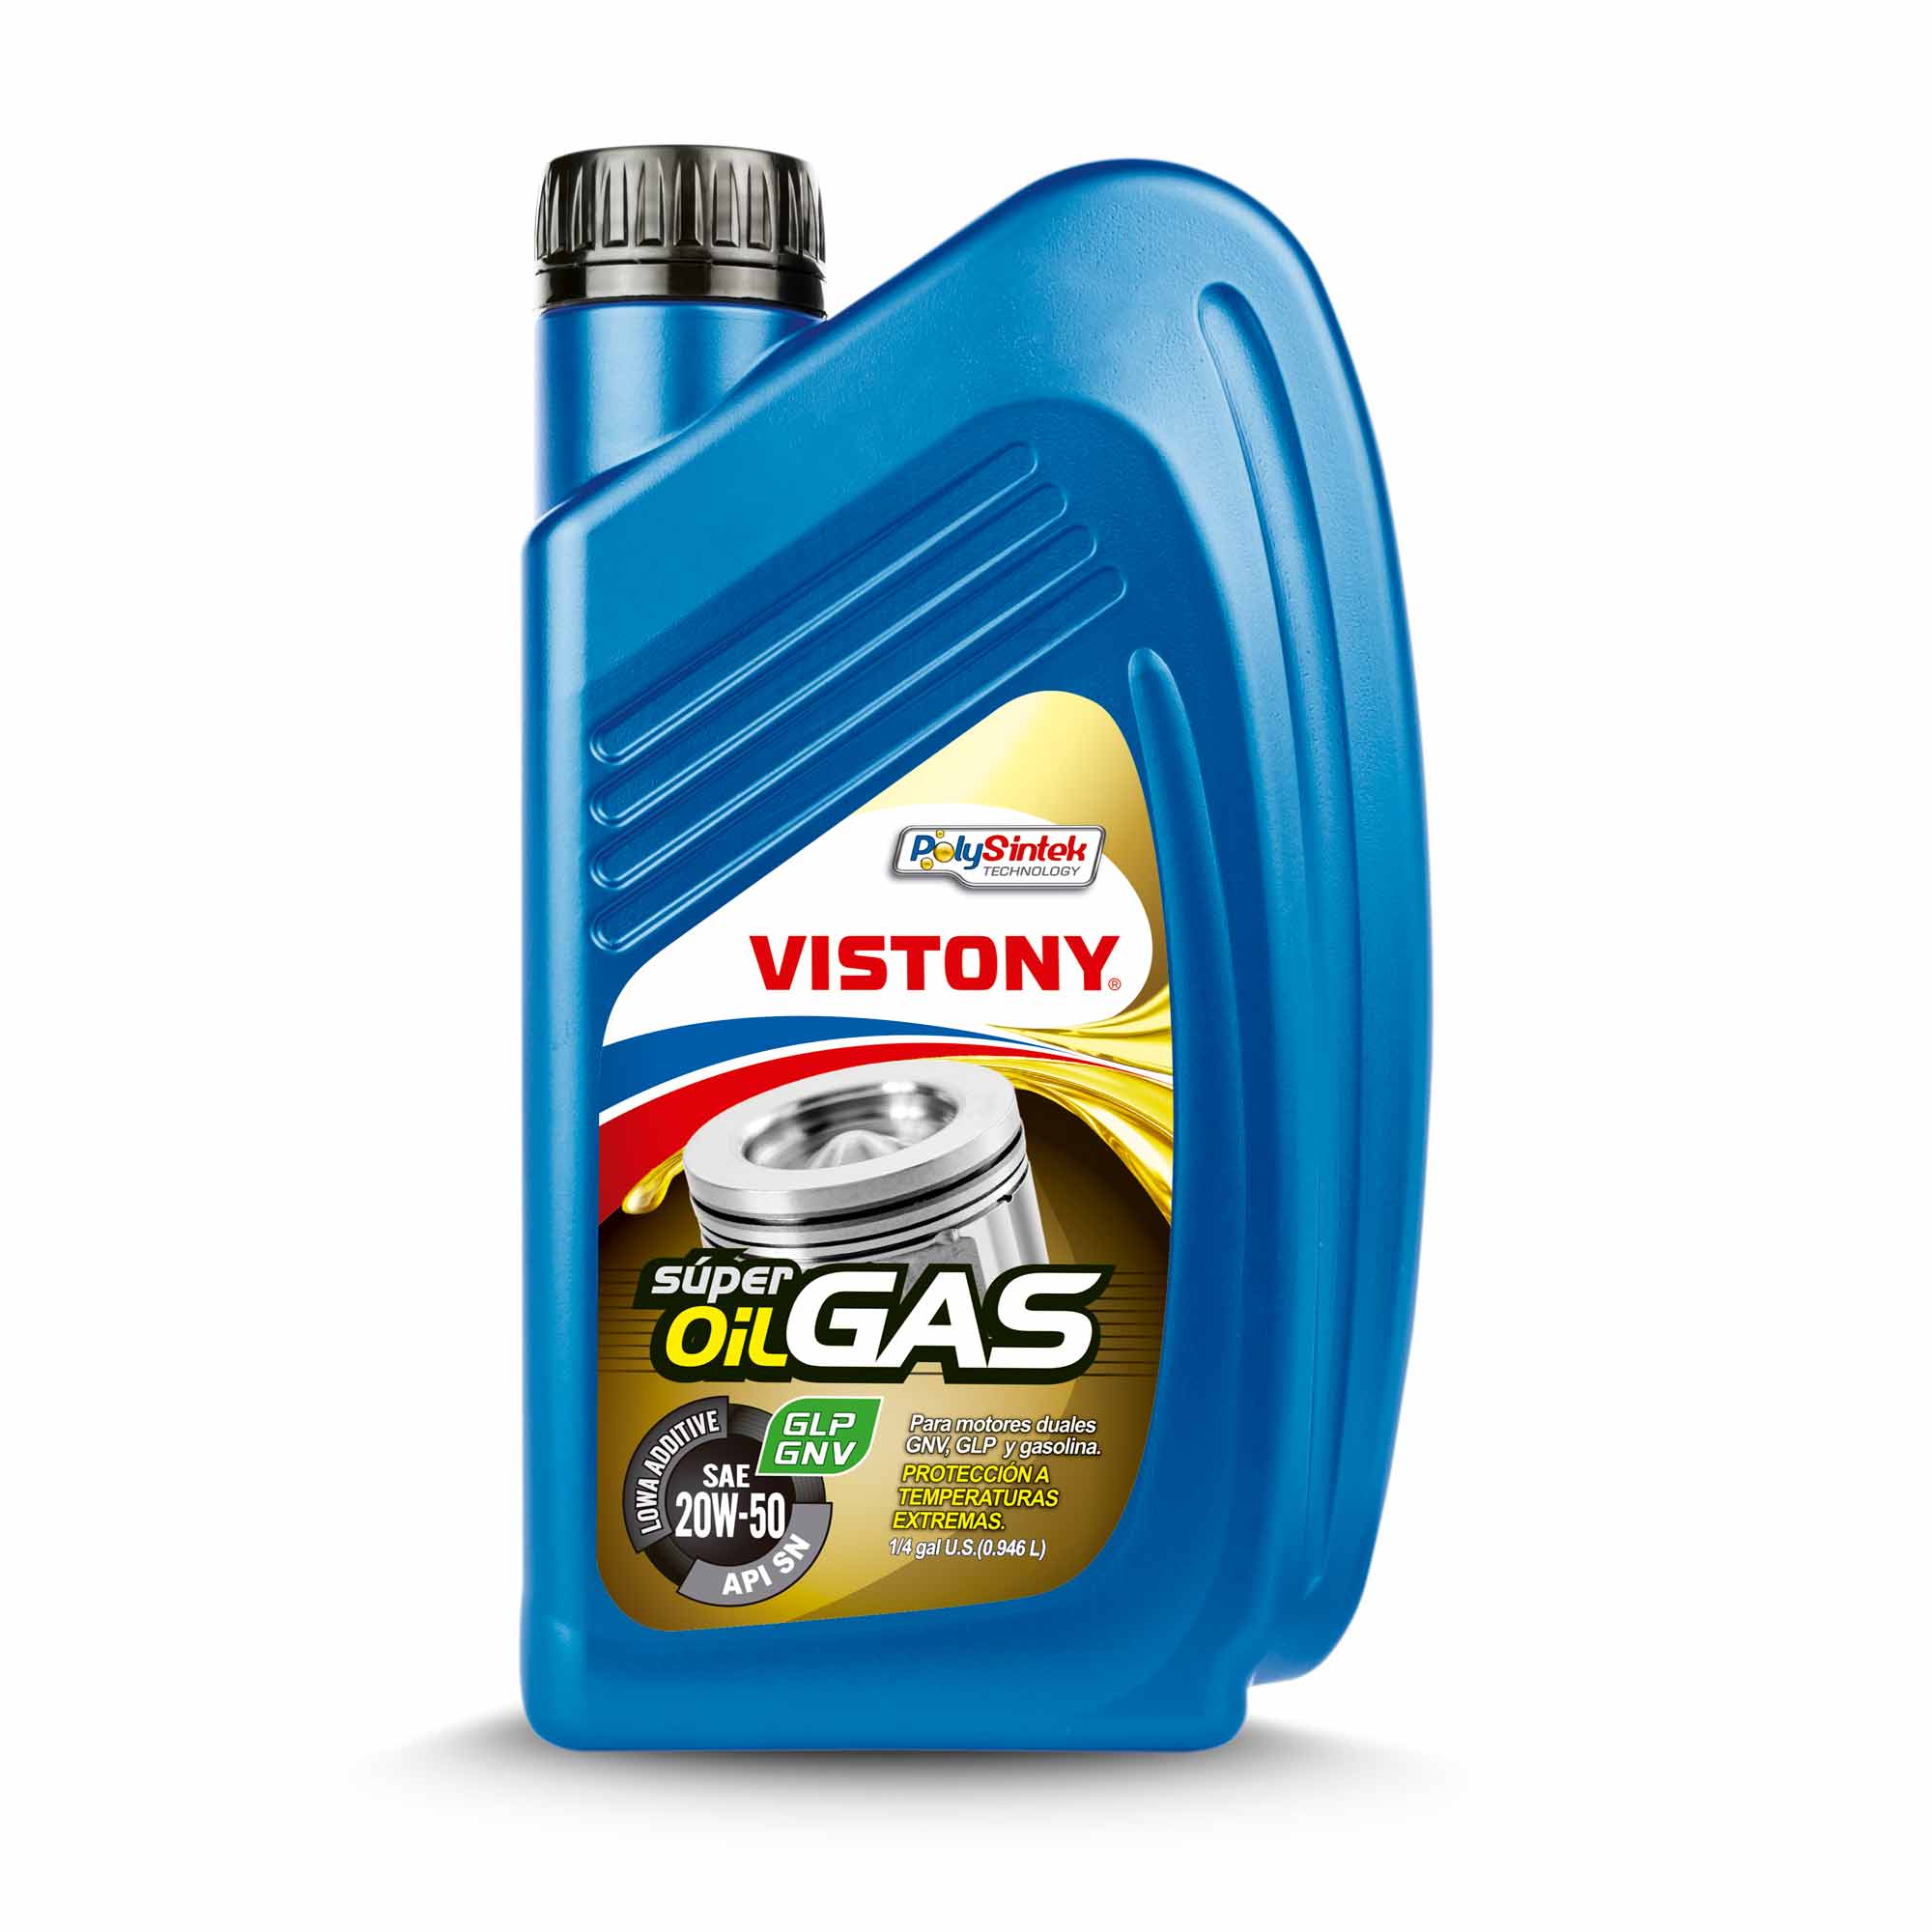 Super Oil Gas VISTONY 1/4 gl 20w50